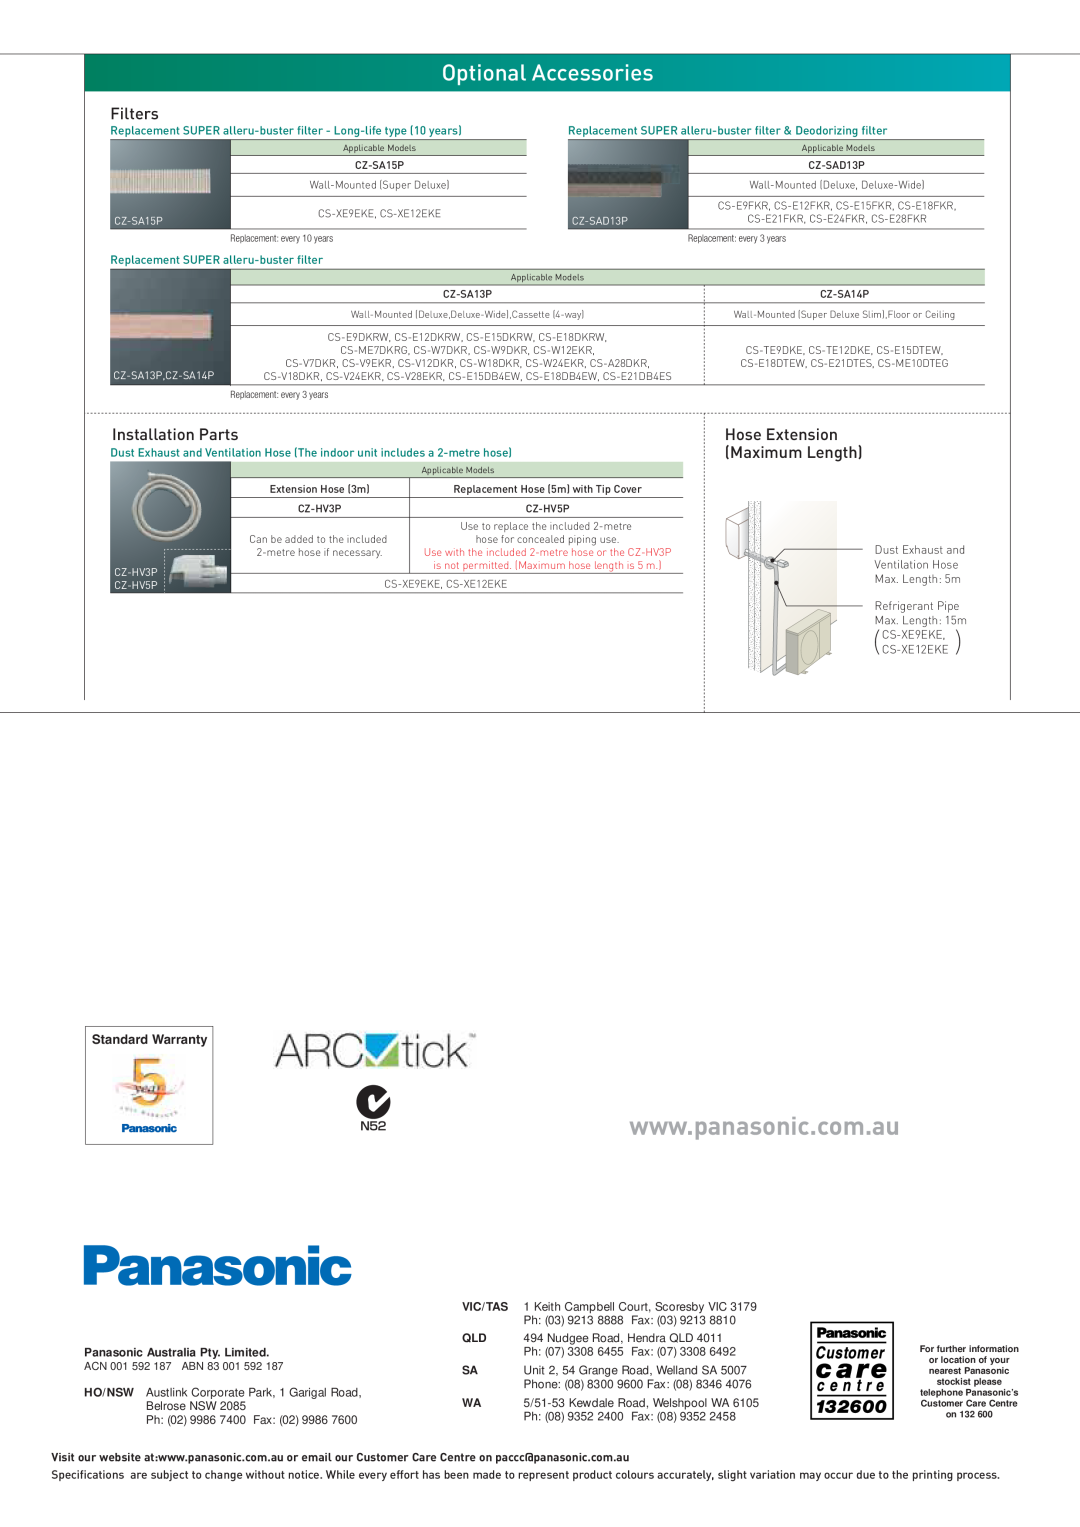 Panasonic 2006/2007 Optional Accessories, Filters, Installation Parts, Hose Extension Maximum Length, Standard Warranty 